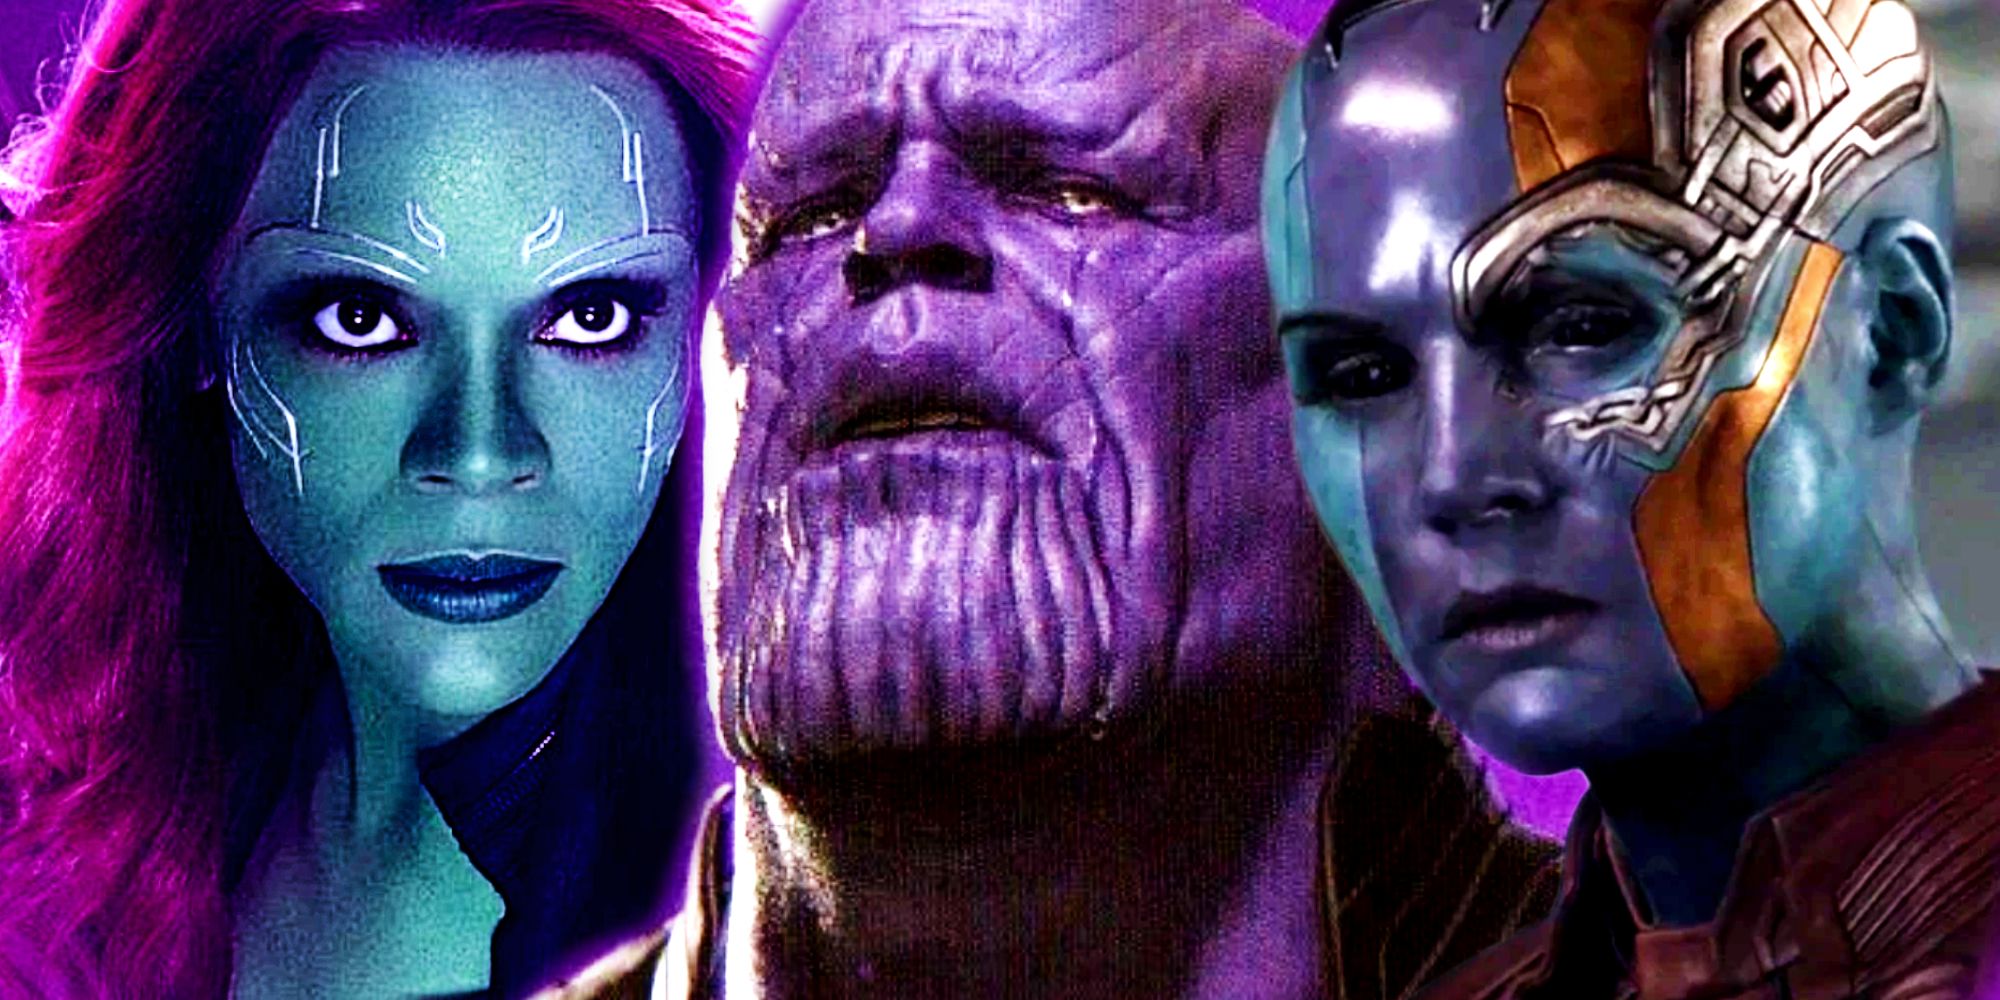 Thanos, Gamora, and Nebula in the MCU